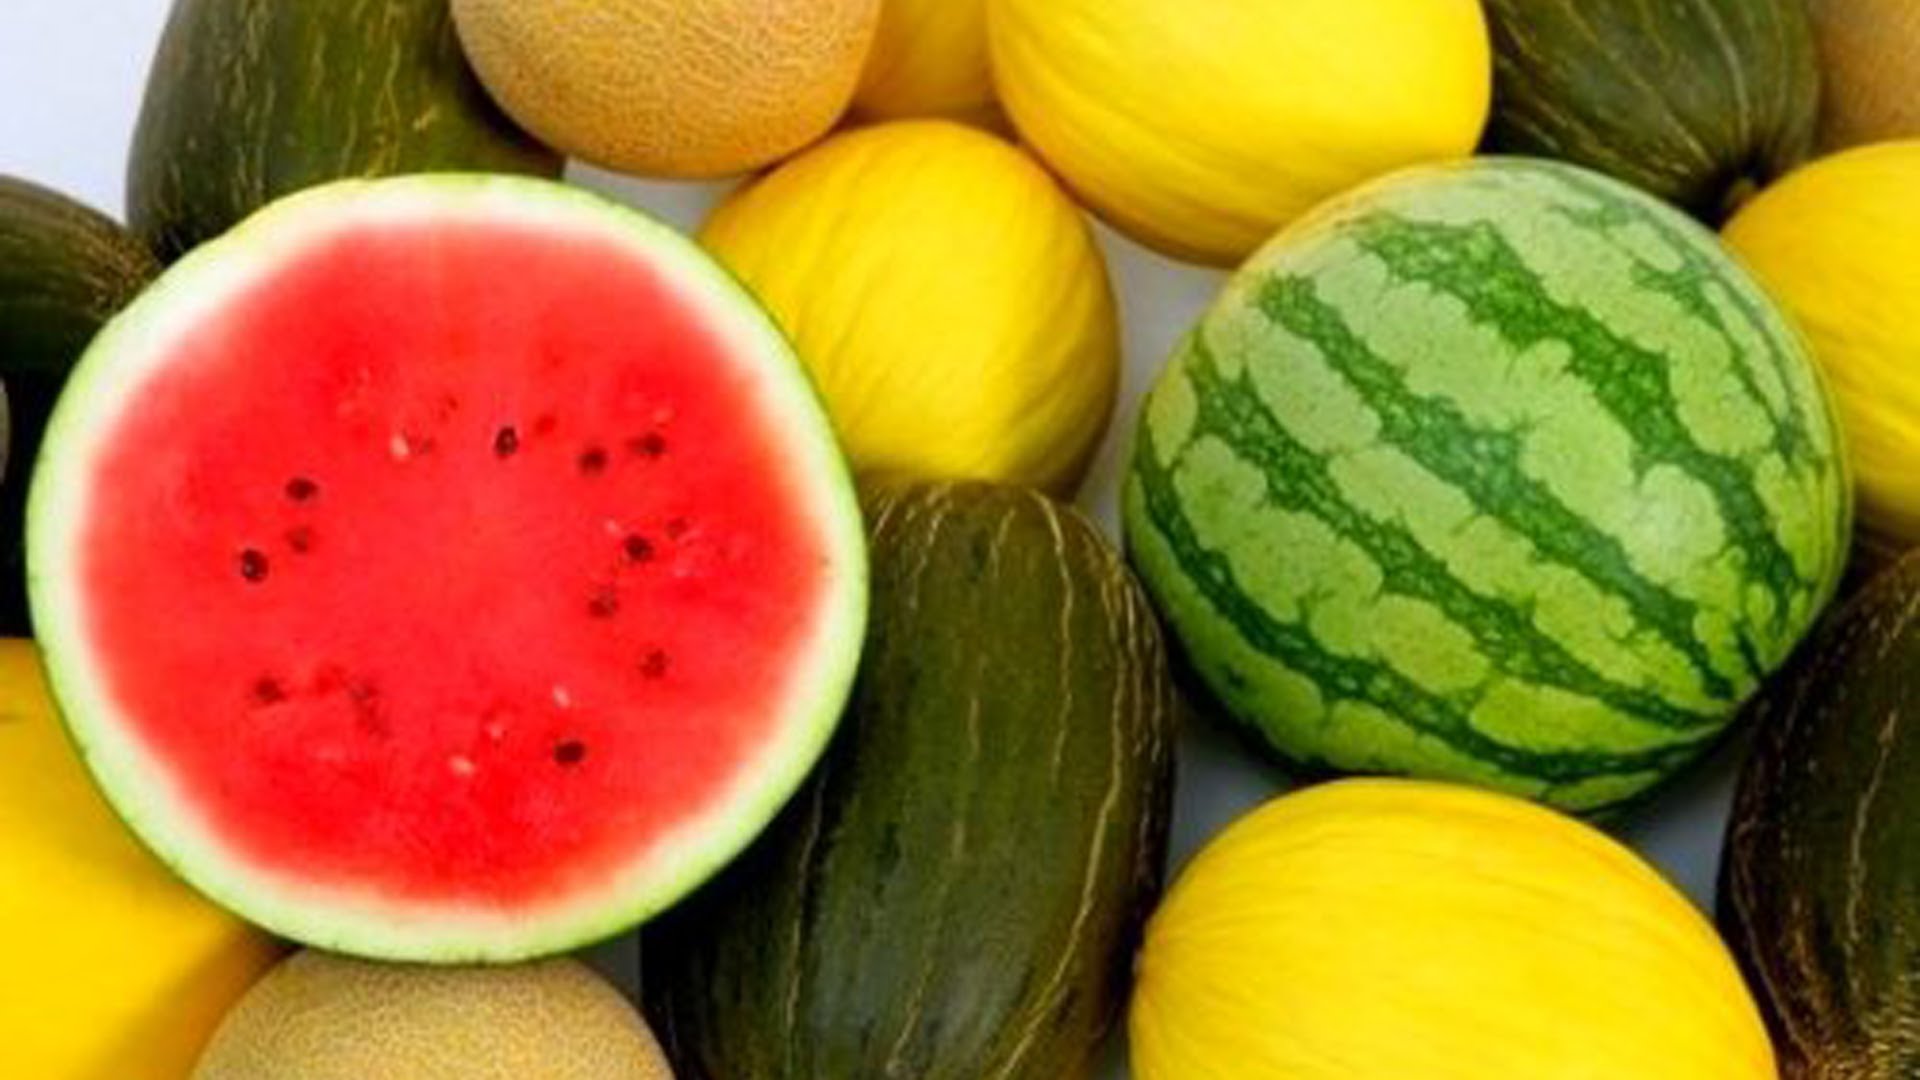 Melon and watermelon are good neighbors